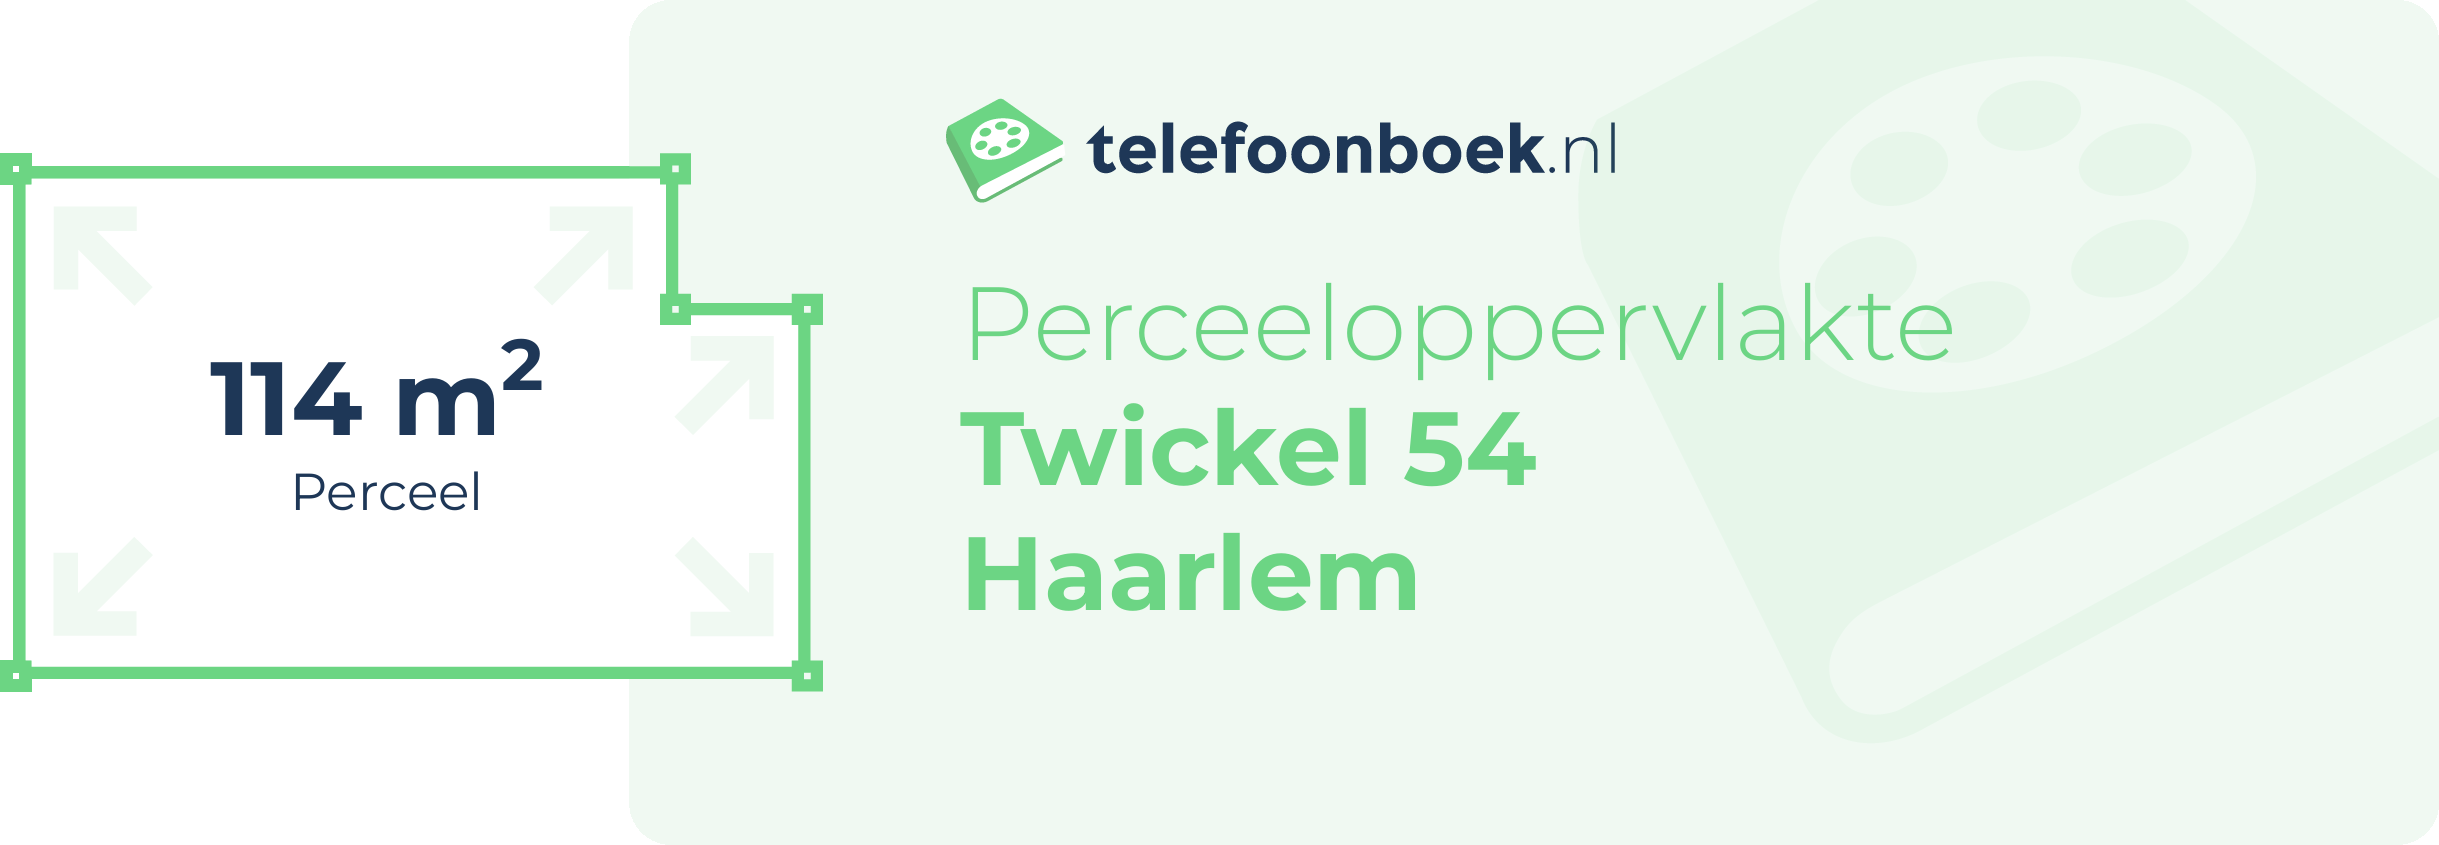 Perceeloppervlakte Twickel 54 Haarlem